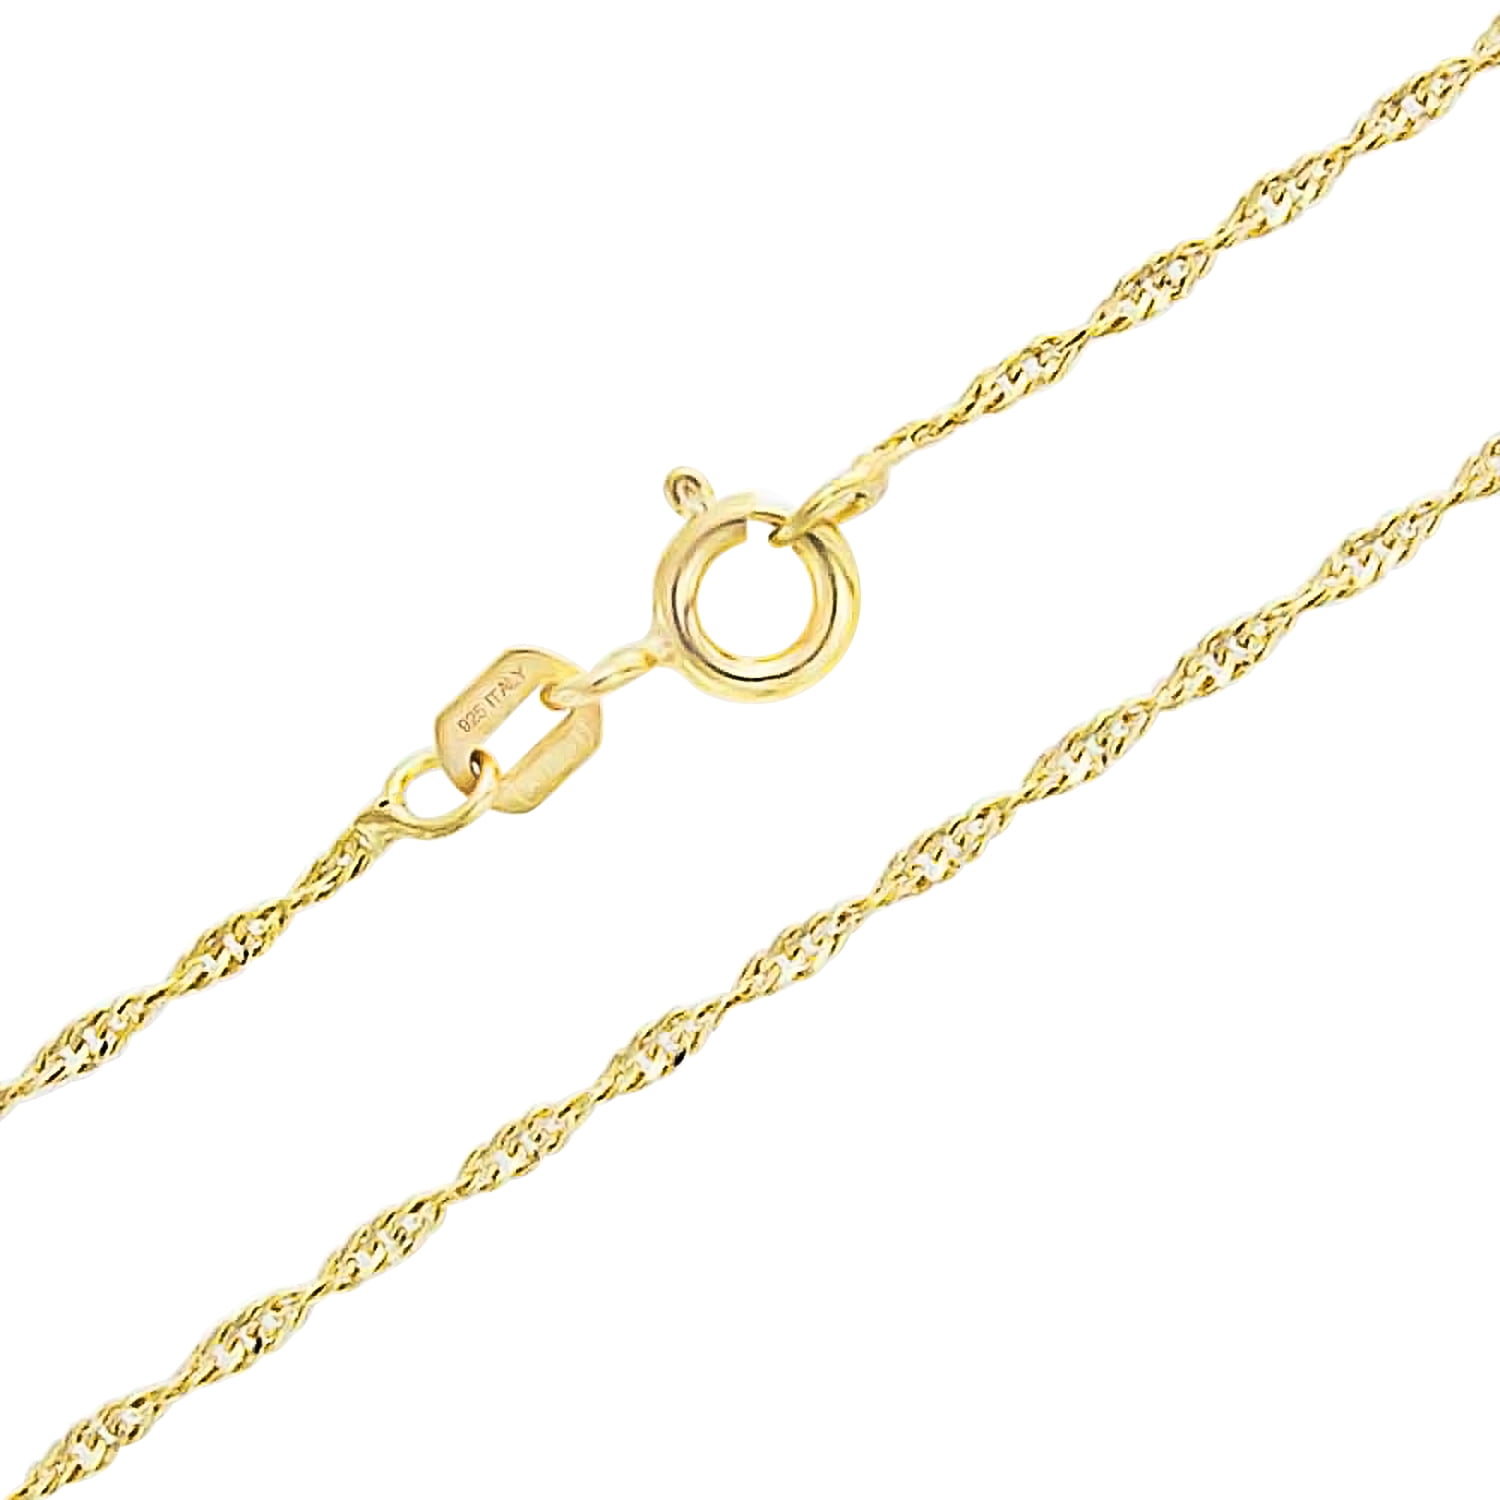 Snake 020 Italian Chain Sterling Silver 925 Necklace Fine Jewelry 30 inch long